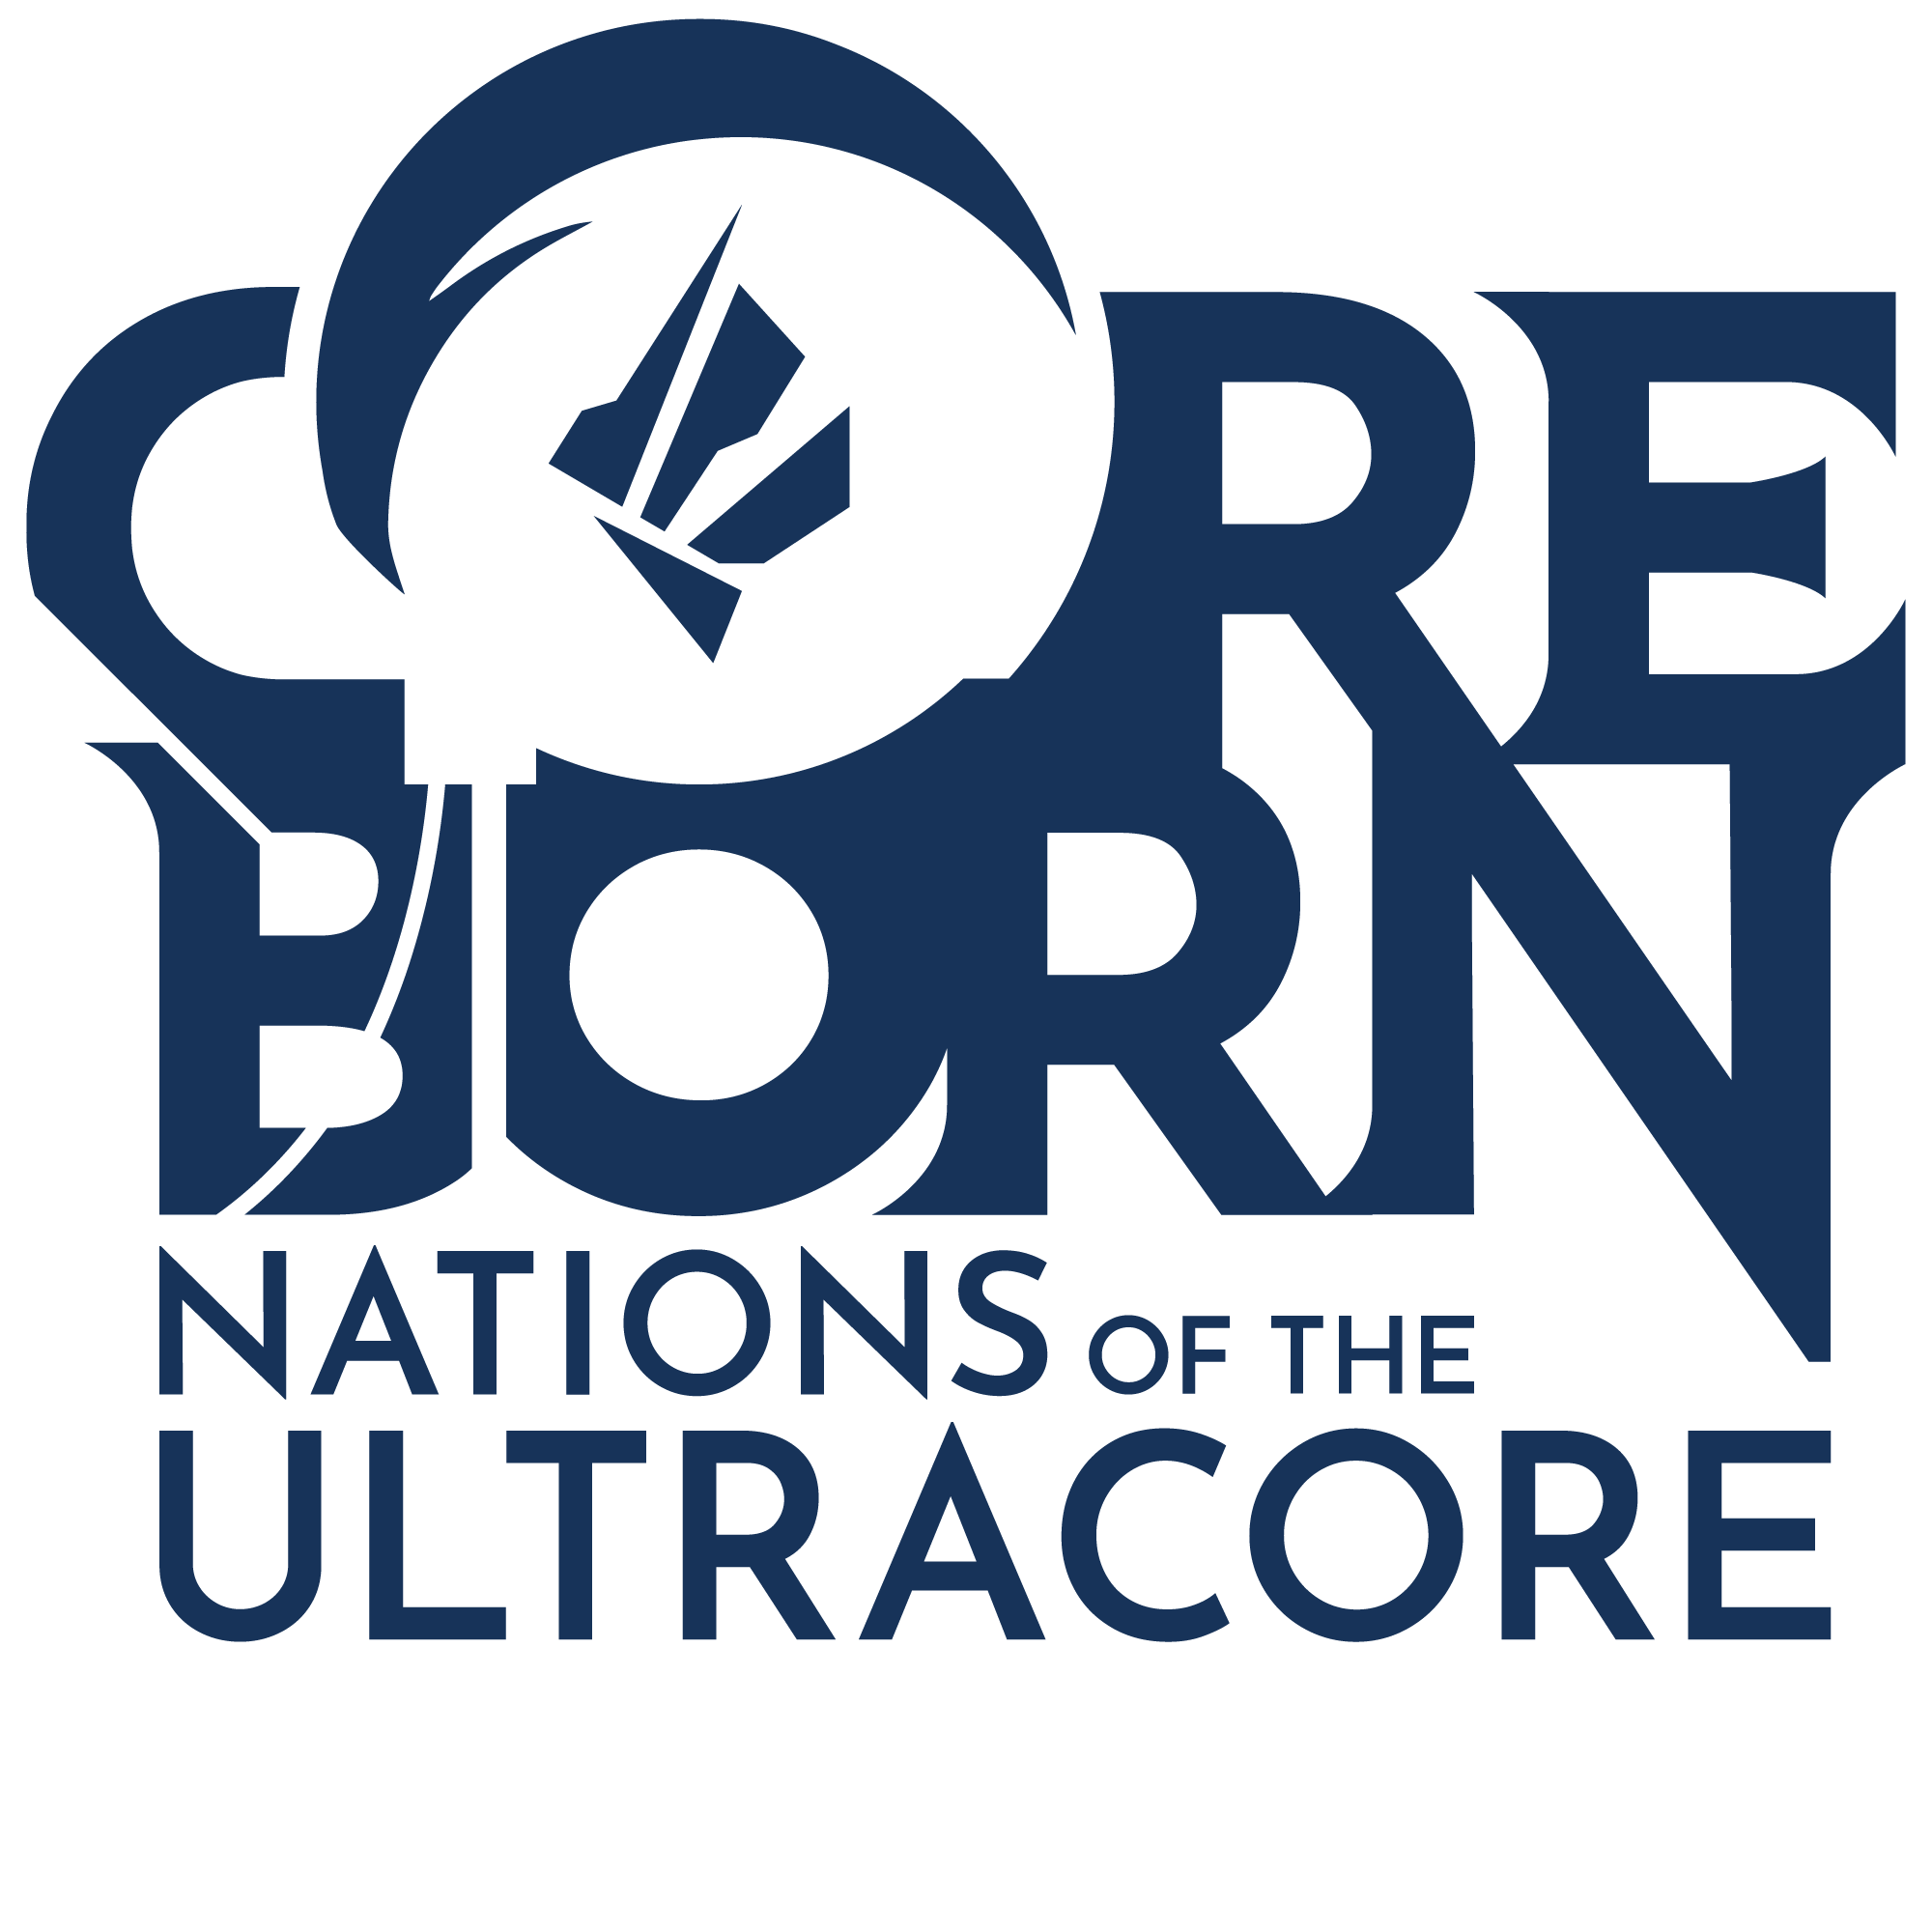 Coreborn: Nations of the Ultracore Logo